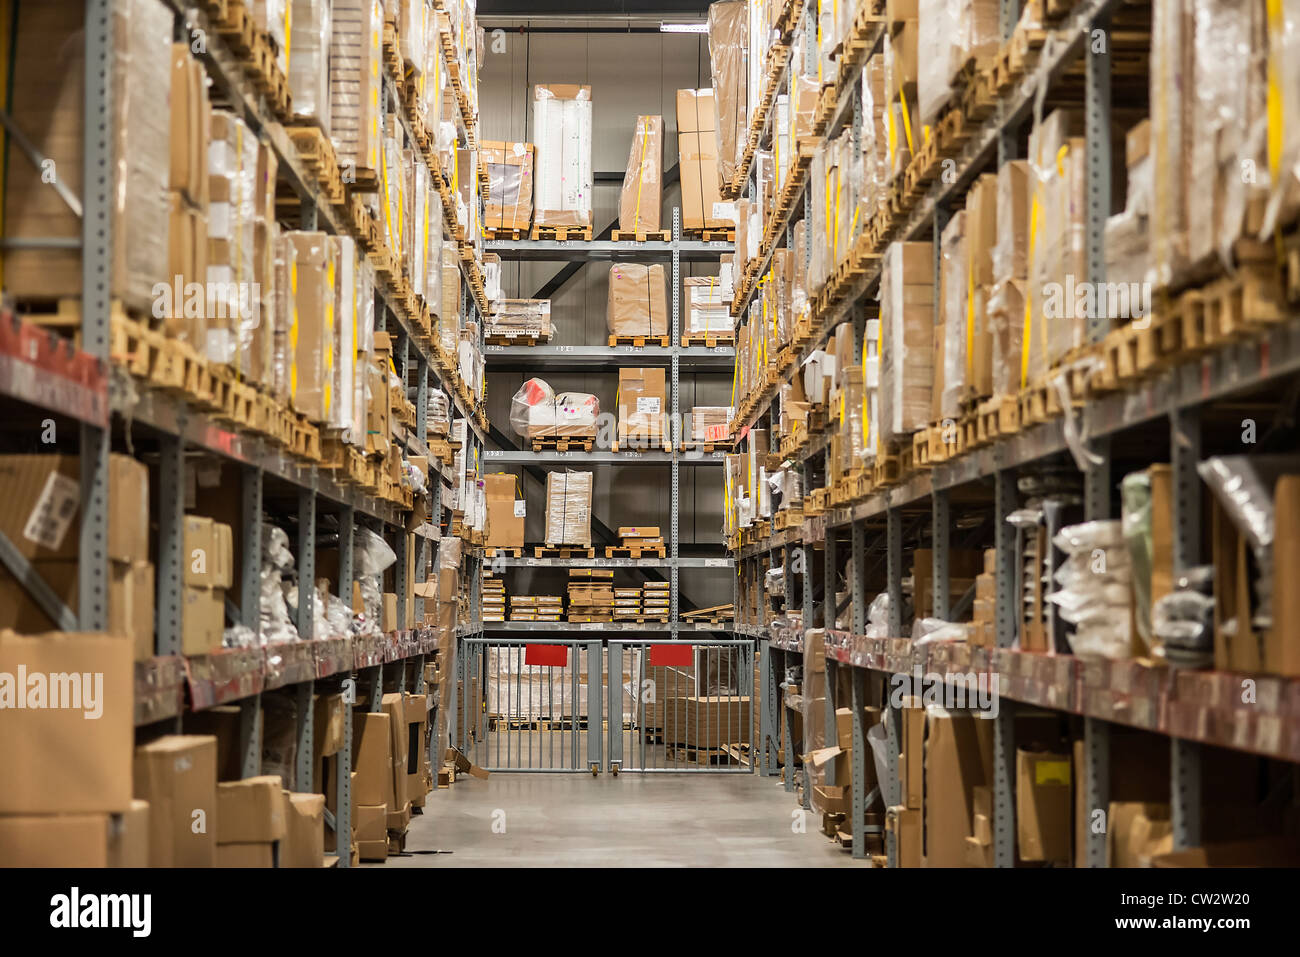 Warehouse storage of retail merchandise. Stock Photo